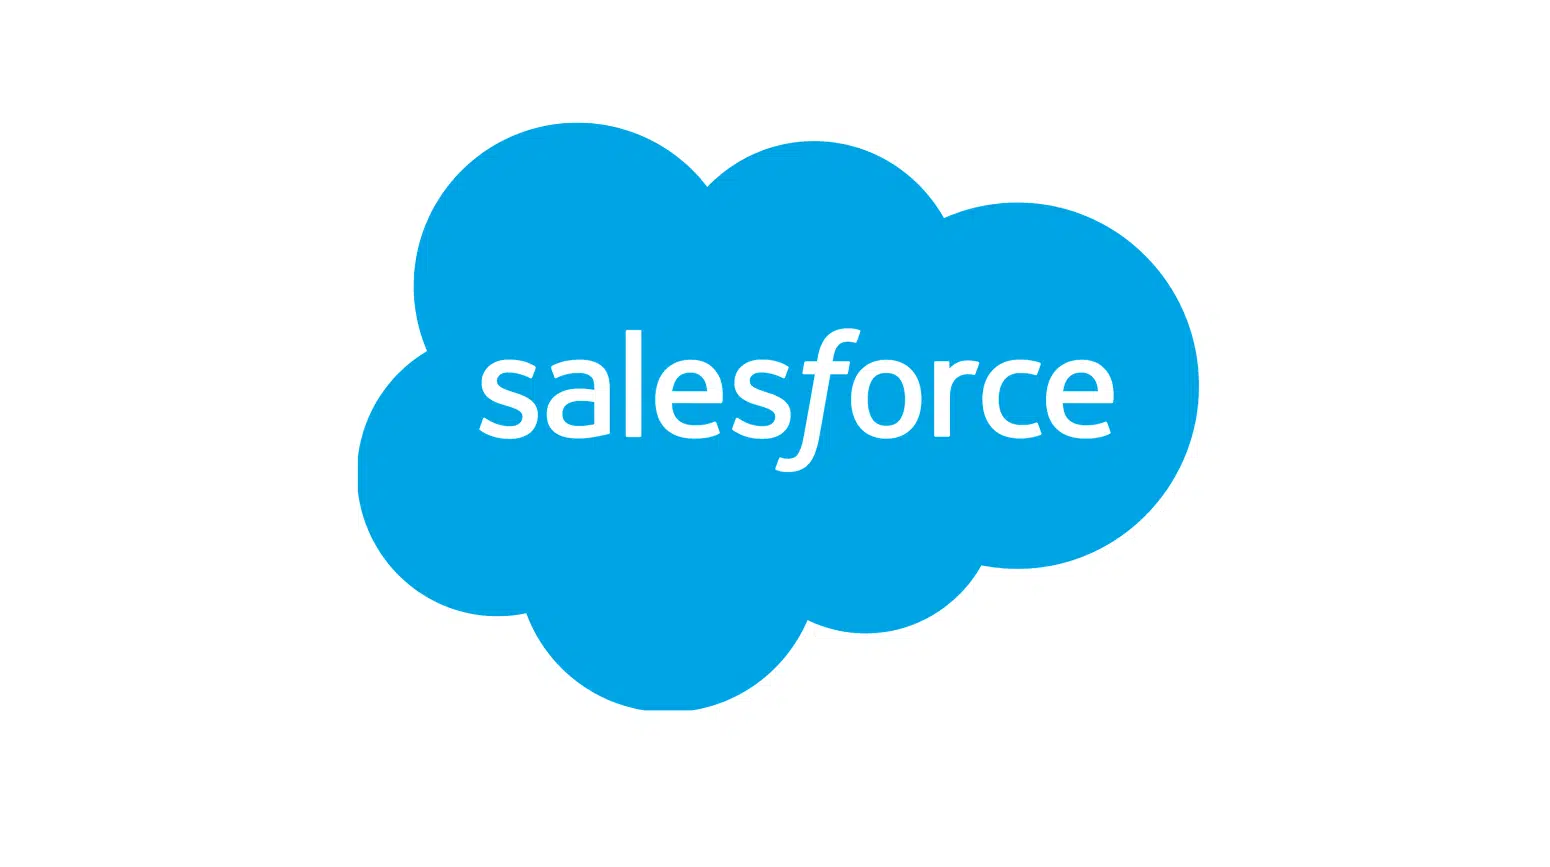 Salesforce: image 1